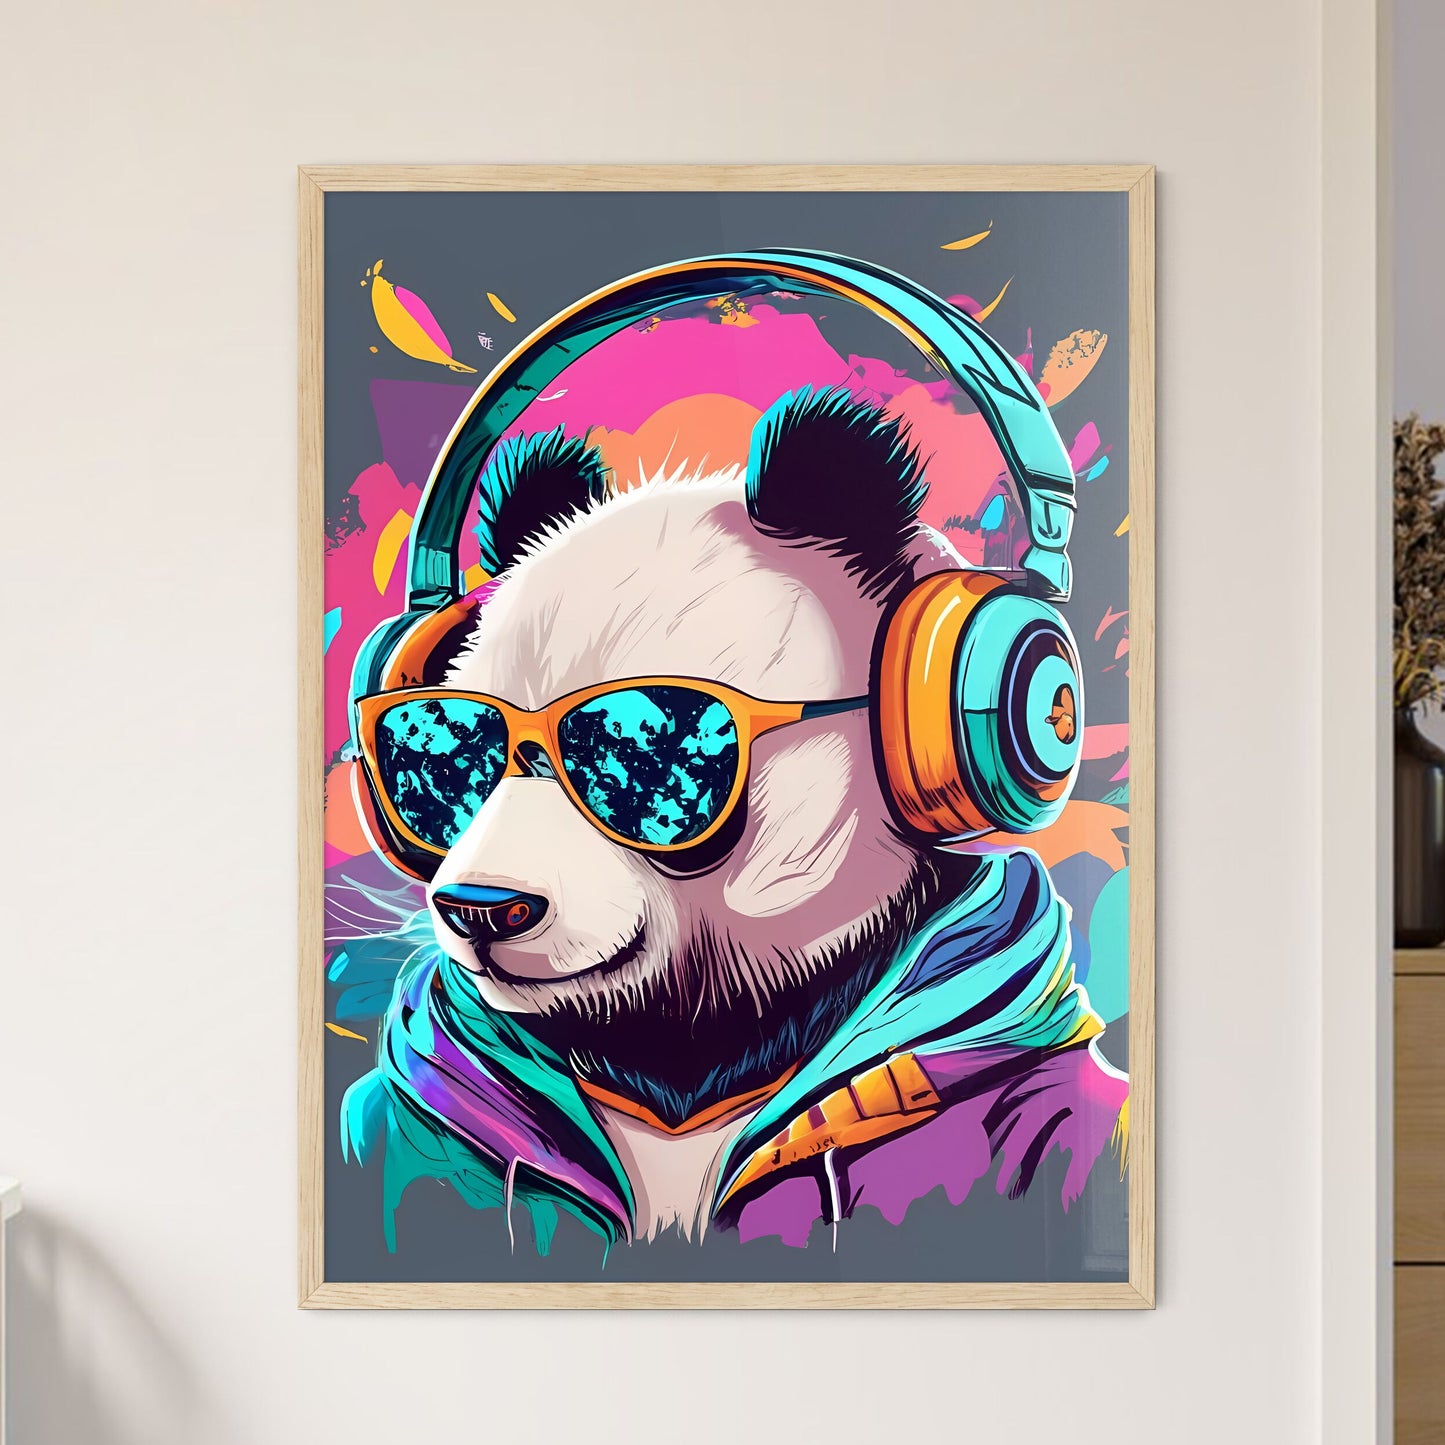 A Panda Wearing Headphones And Sunglasses Art Print Default Title